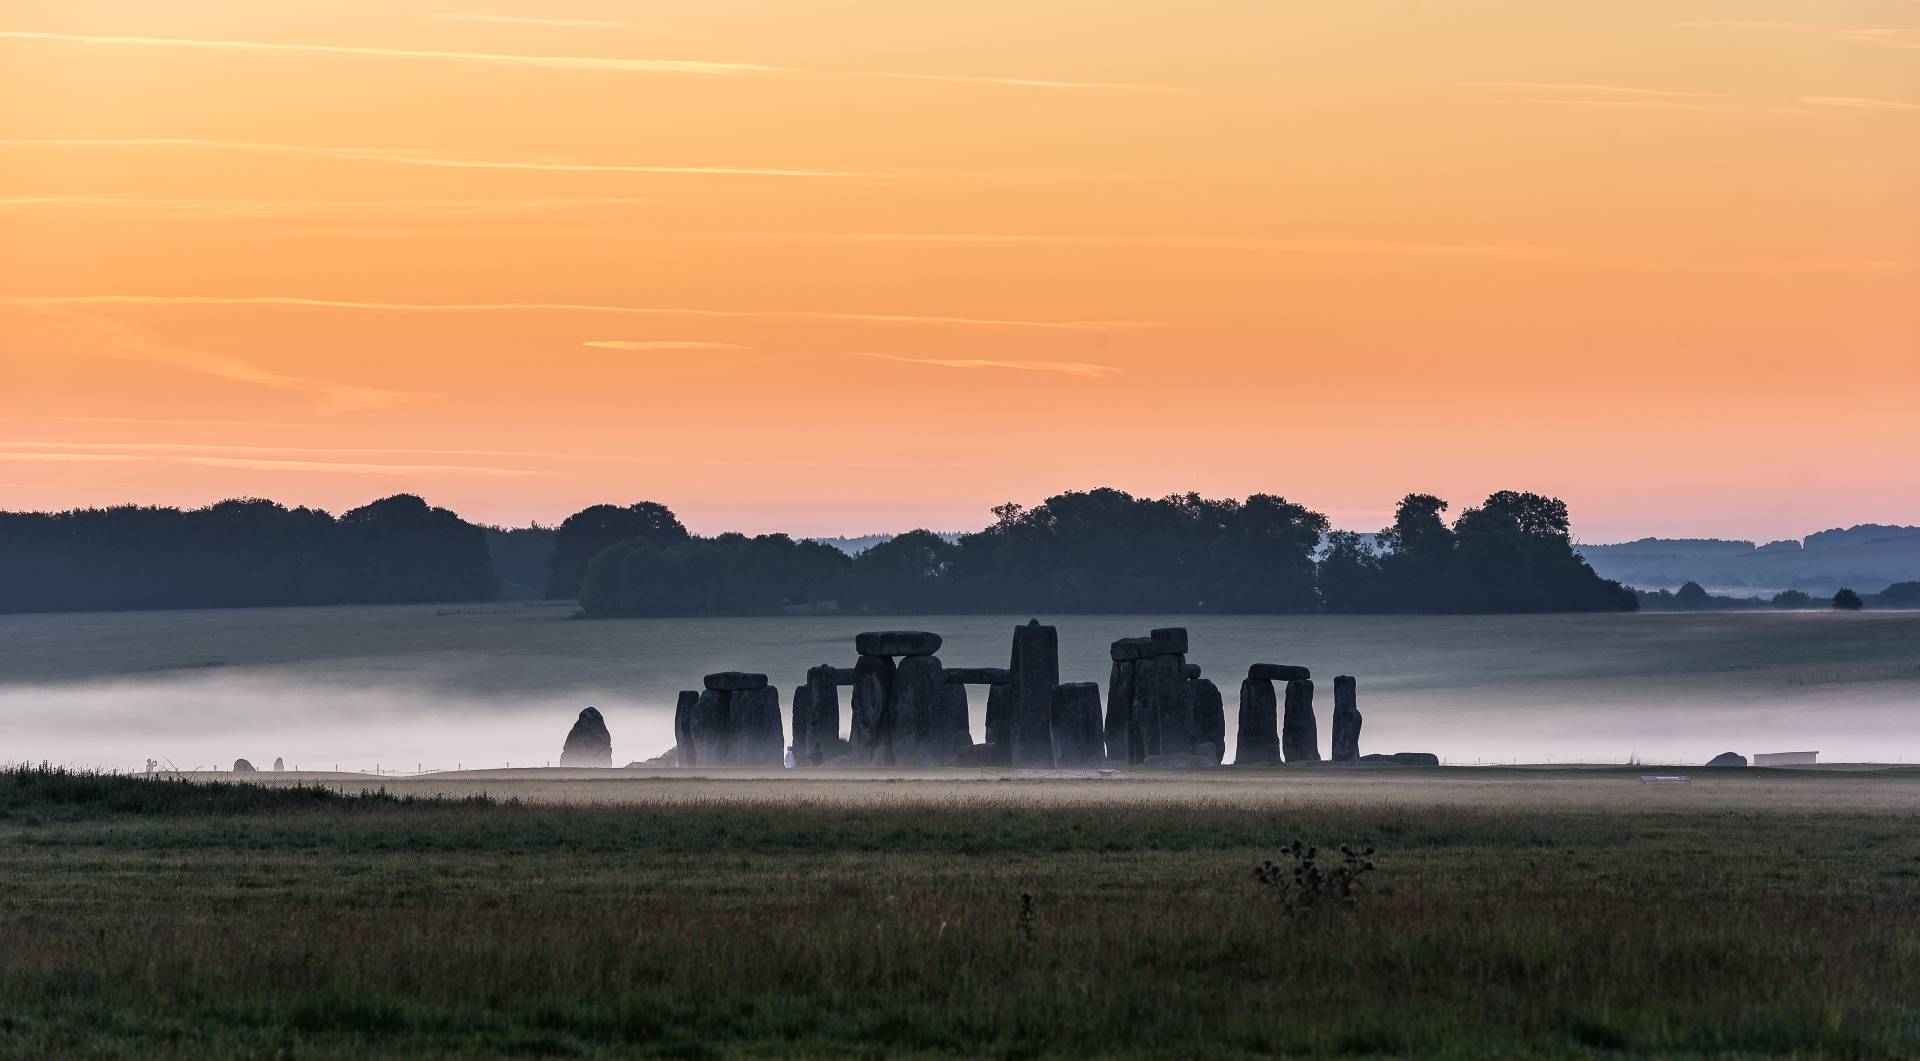 Stonehenge ၊ နေထွက်ချိန်တွင် မြူခိုးများ။ ရှေးဟောင်းကျောက်တုံးကြီးသည် အင်္ဂလန်နိုင်ငံ၊ Salisbury၊ Wiltshire၊ UK တွင် တည်ရှိသည်။ © Image Credit: Andrei Botnari | DreamsTime.com မှ လိုင်စင်ရရှိသည် (တည်းဖြတ်/လုပ်ငန်းသုံး စတော့ဓာတ်ပုံ)